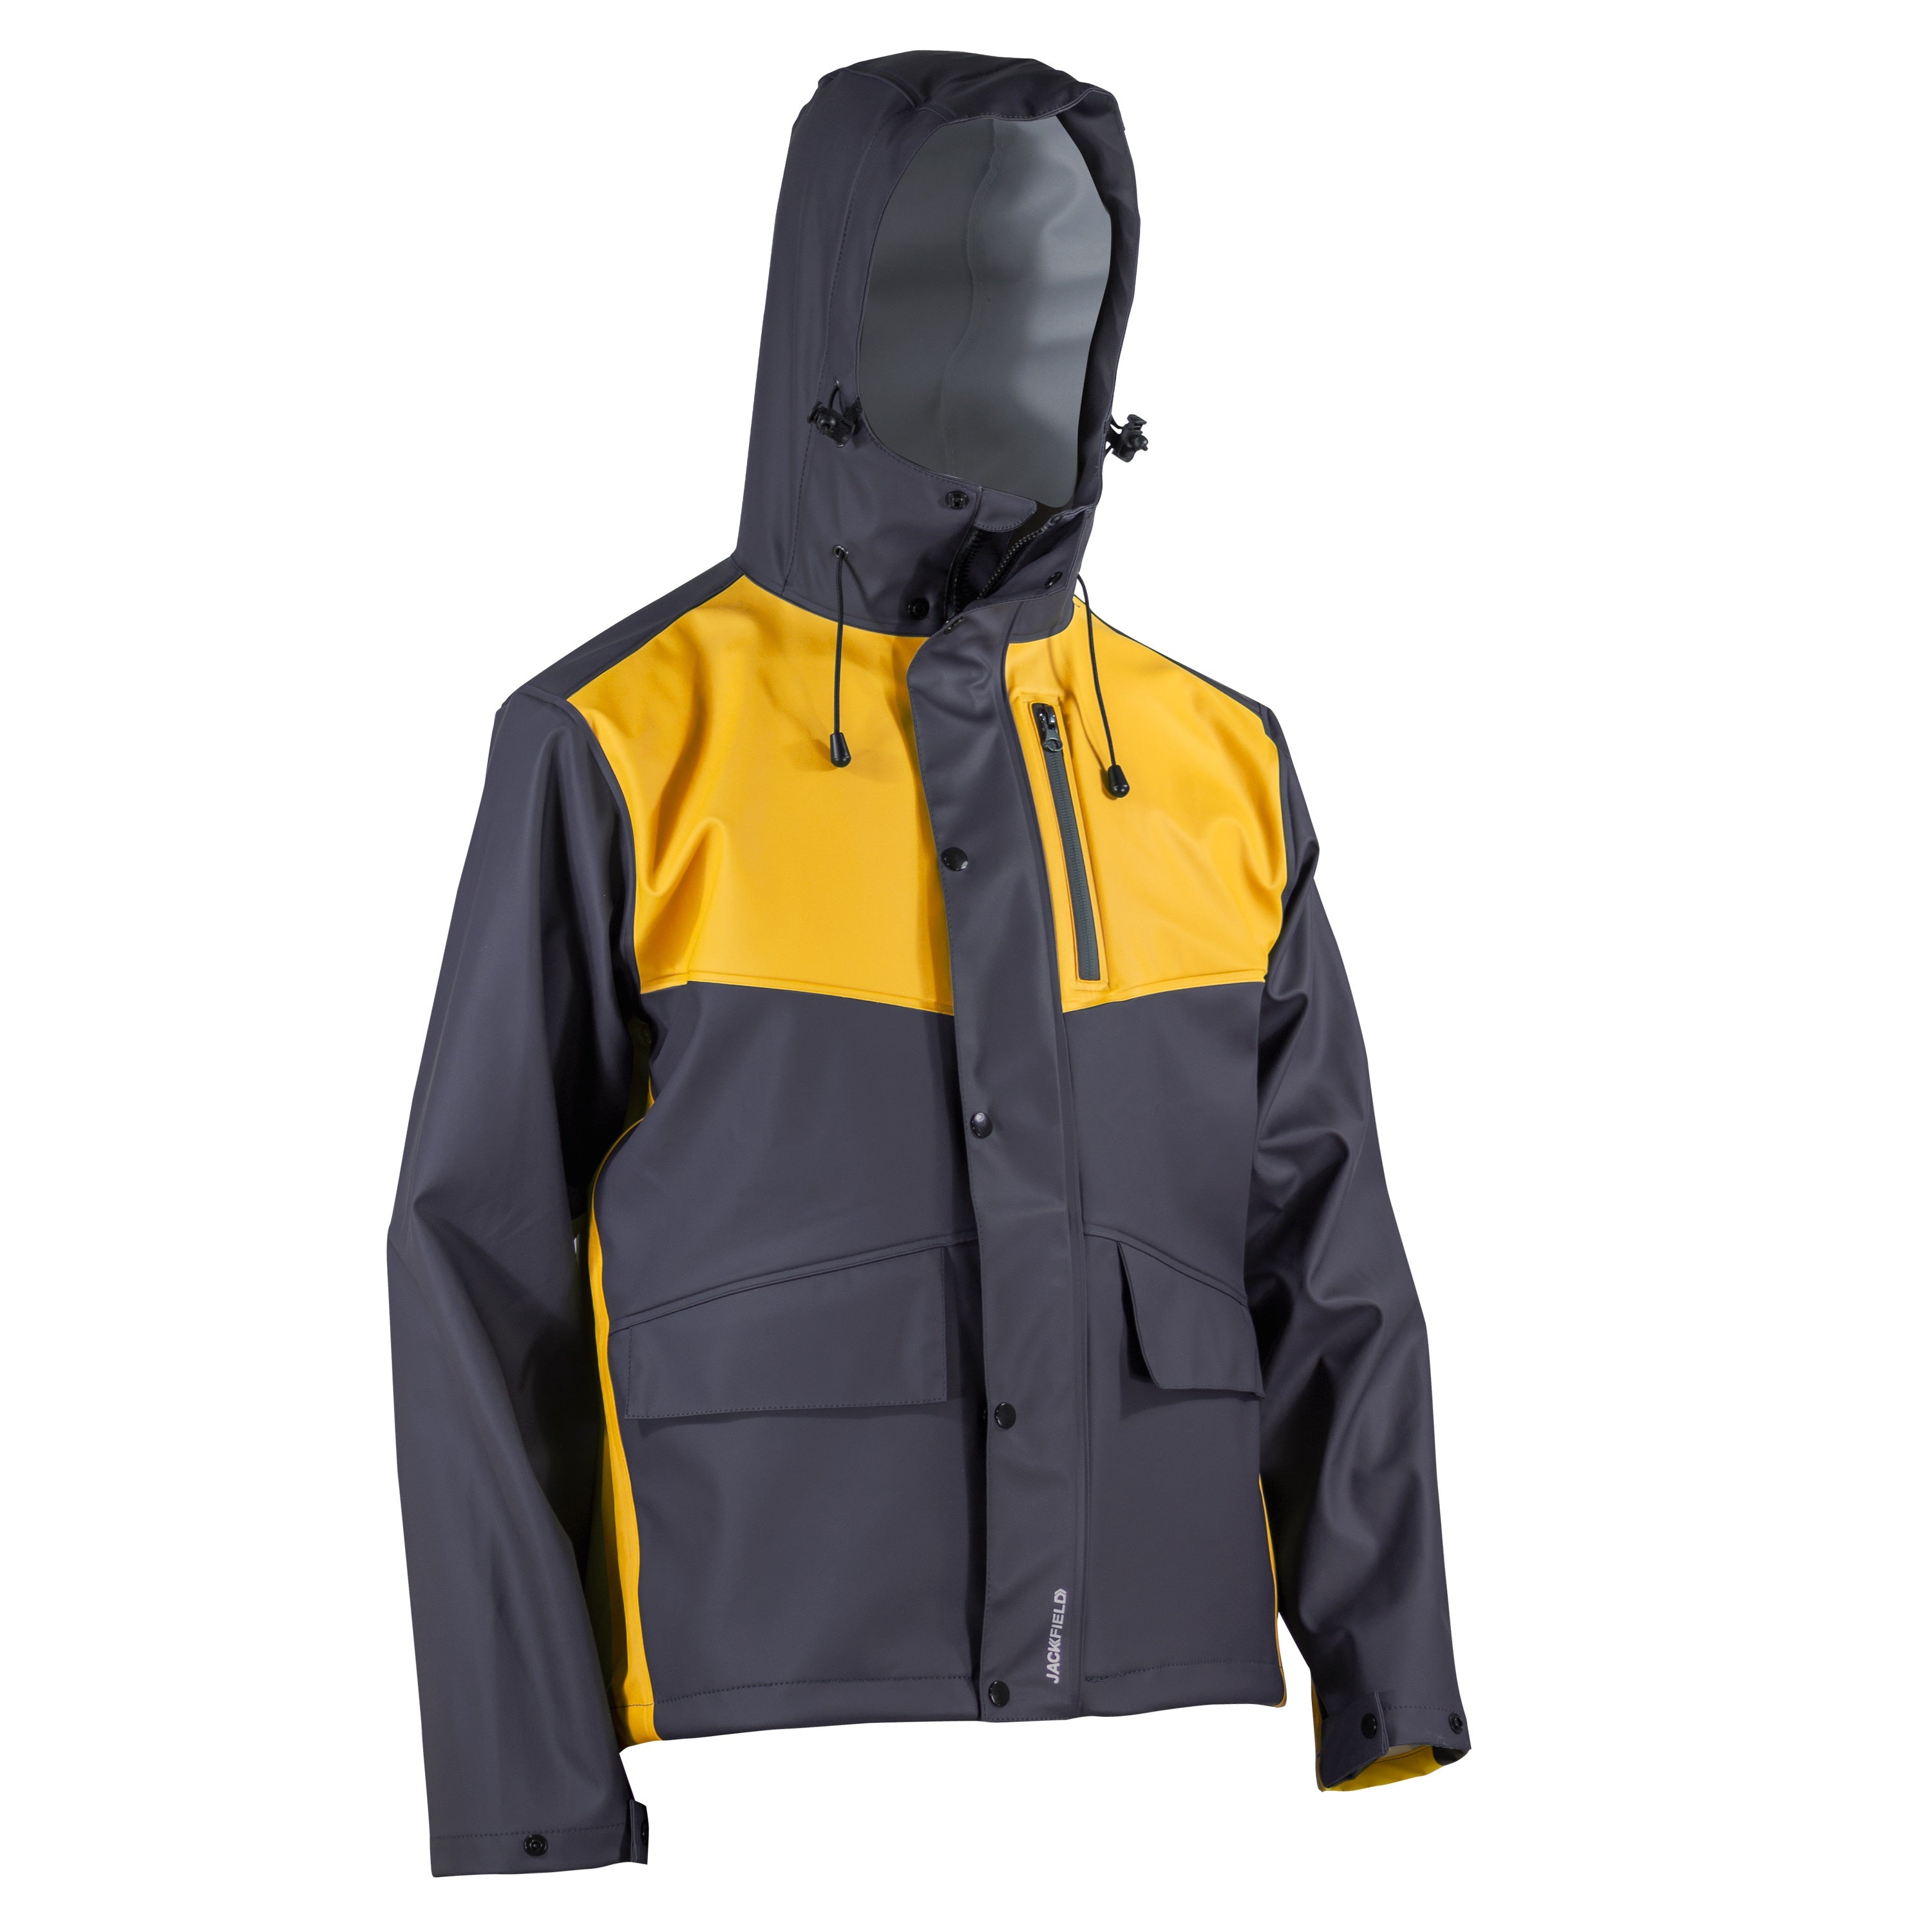 Manteau imperméable 2 tons - Homme||Rain jacket 2 shades - Men’s